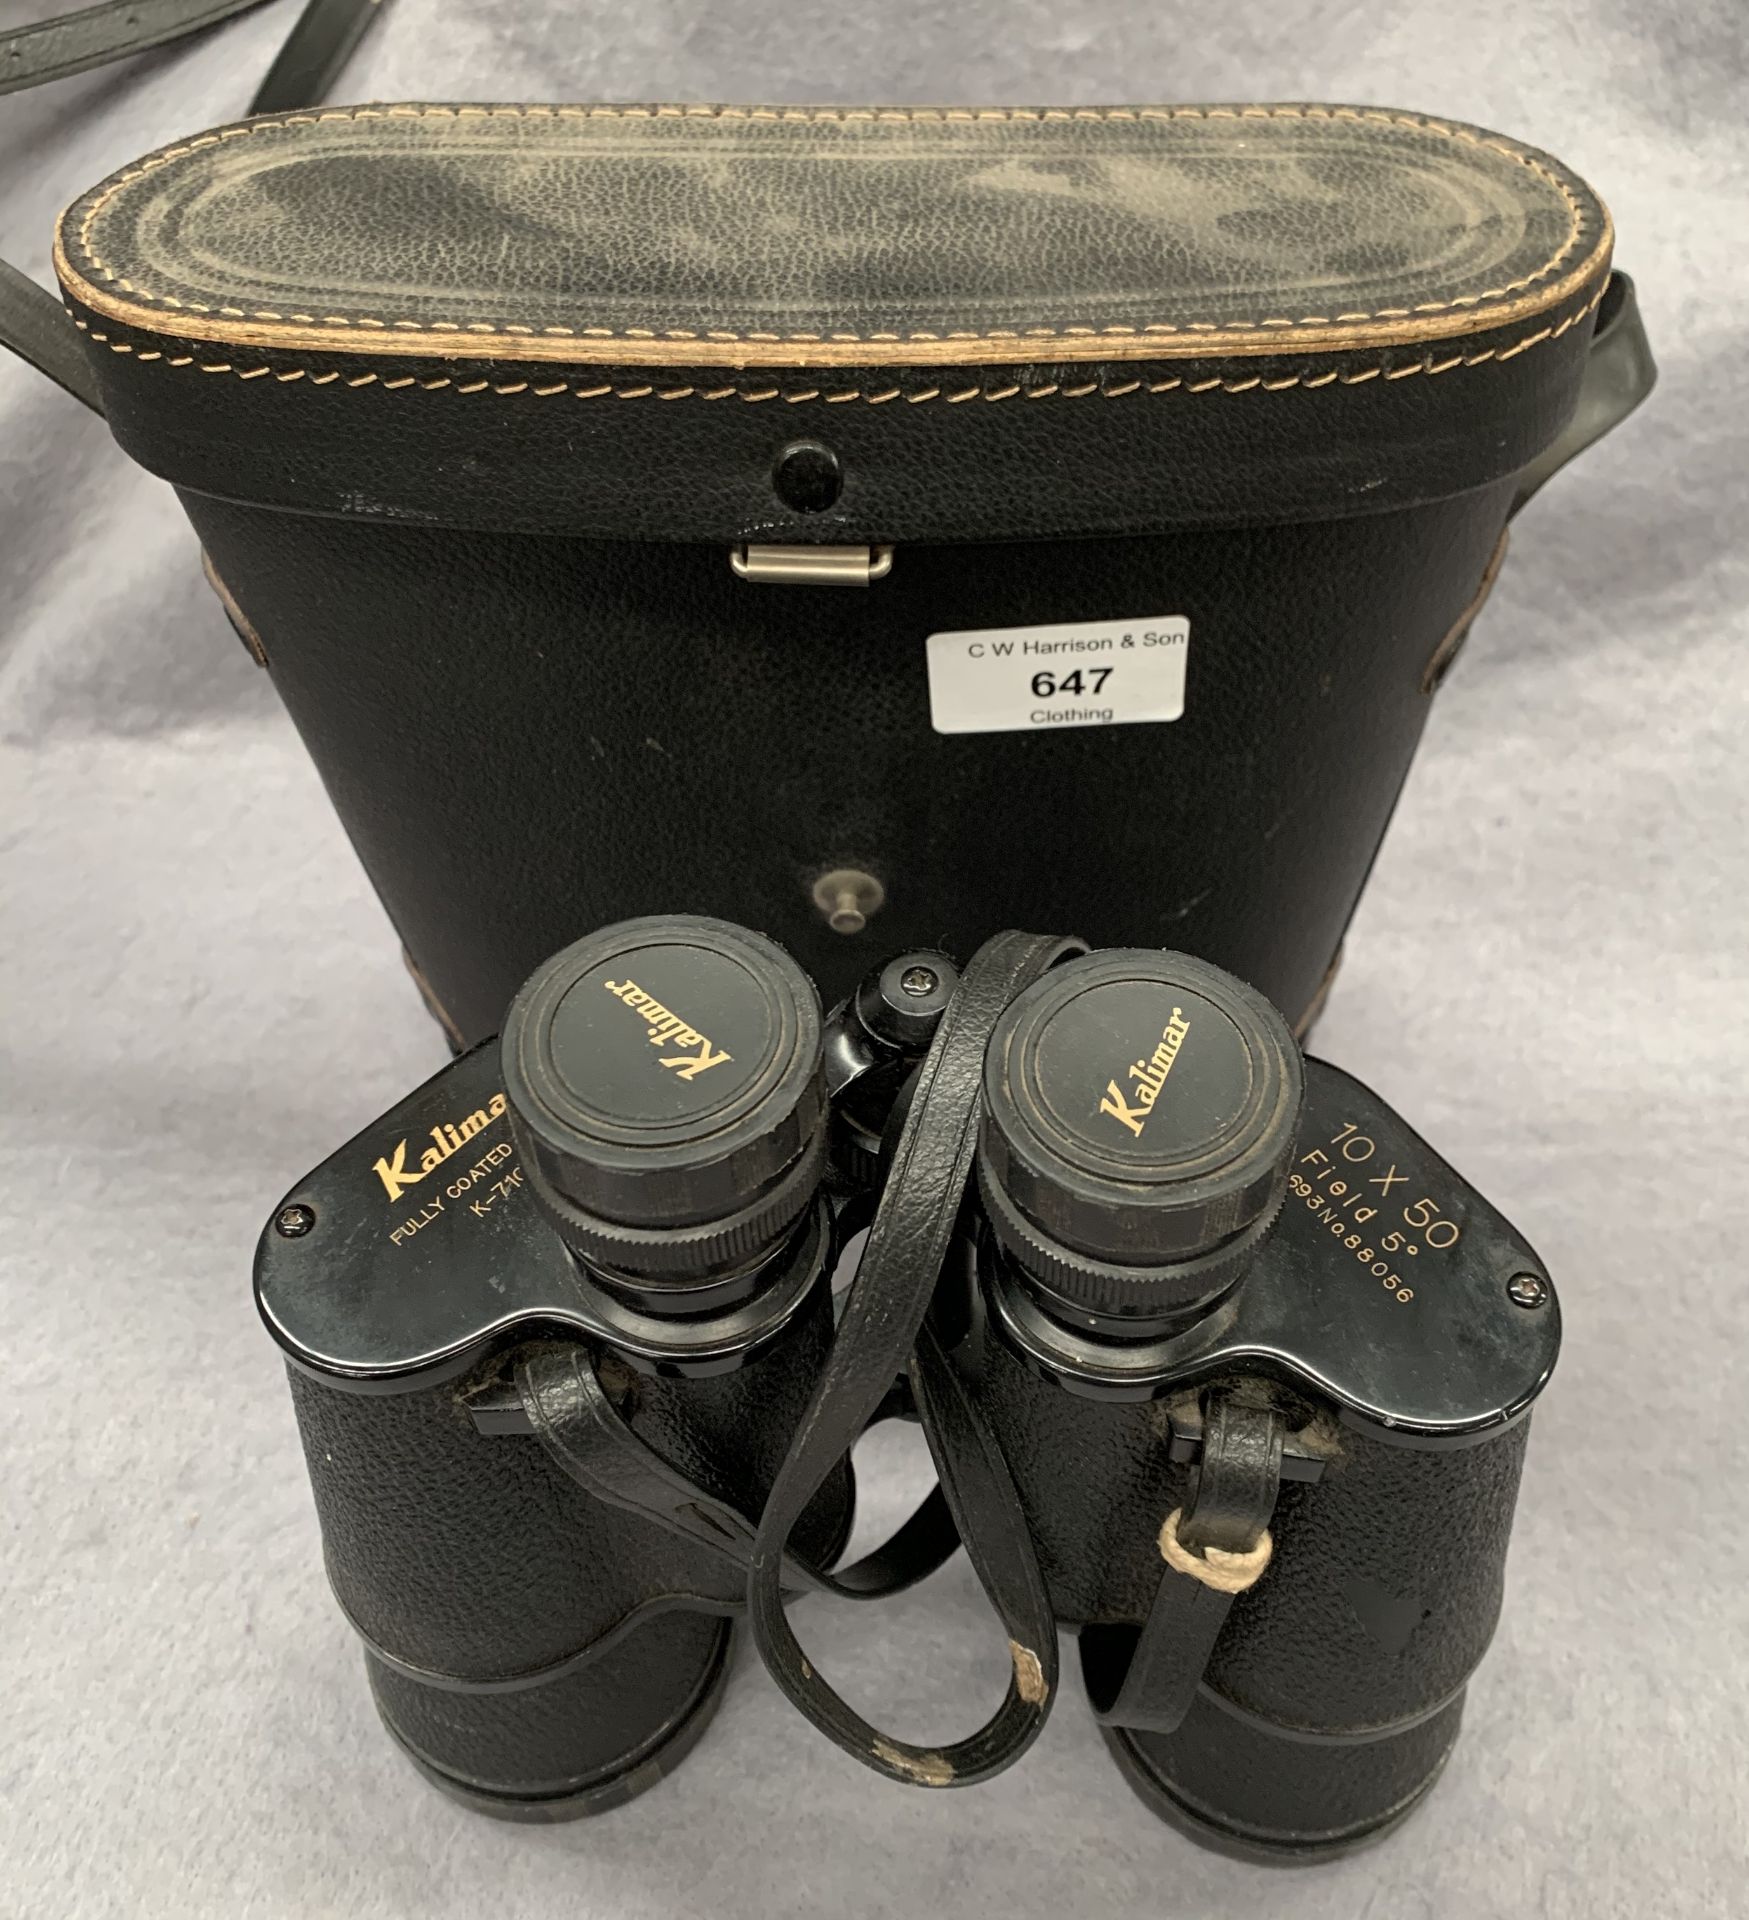 A pair of Kalimar K-700 10x50 field binoculars in case